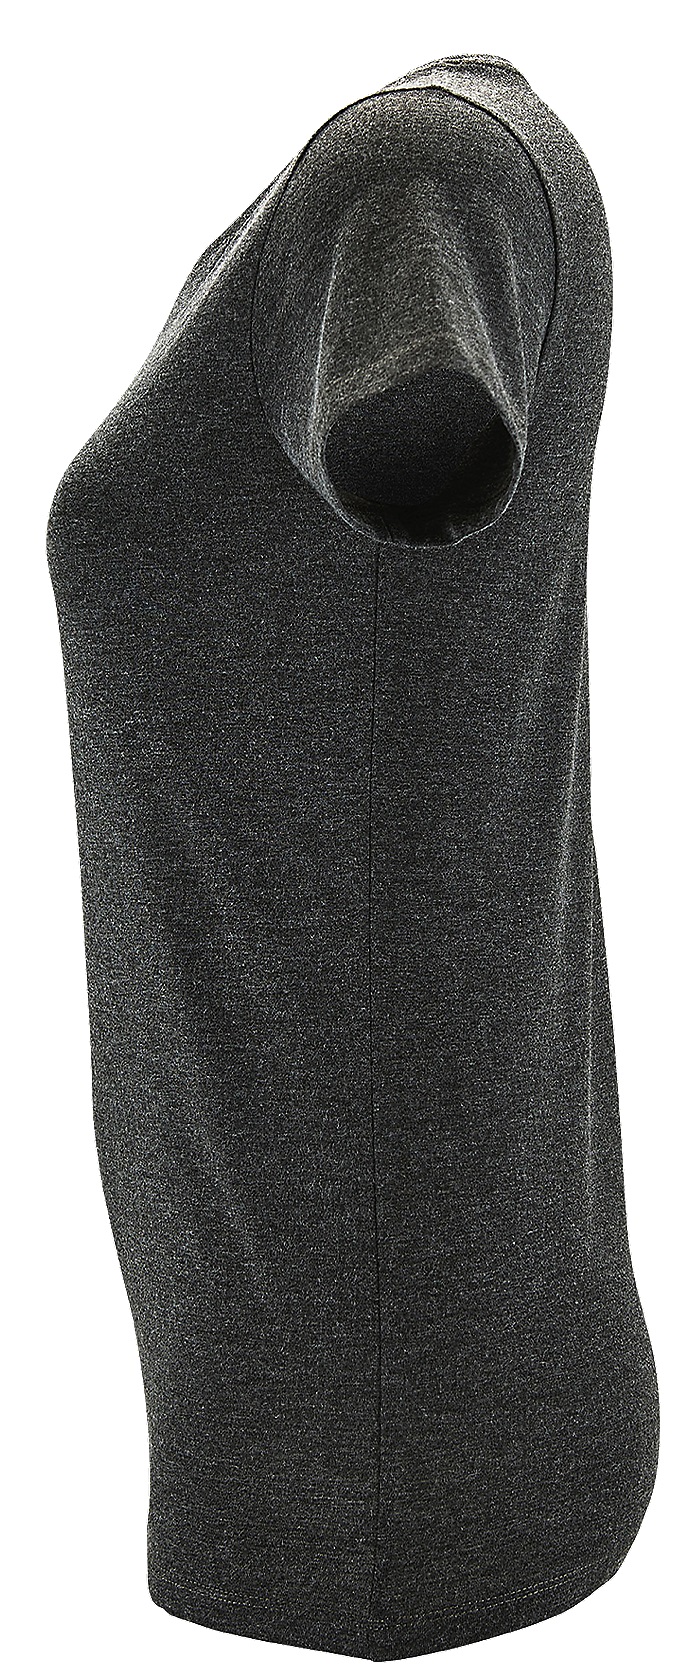 Women´s Round Neck Fitted T-Shirt Regent L02758